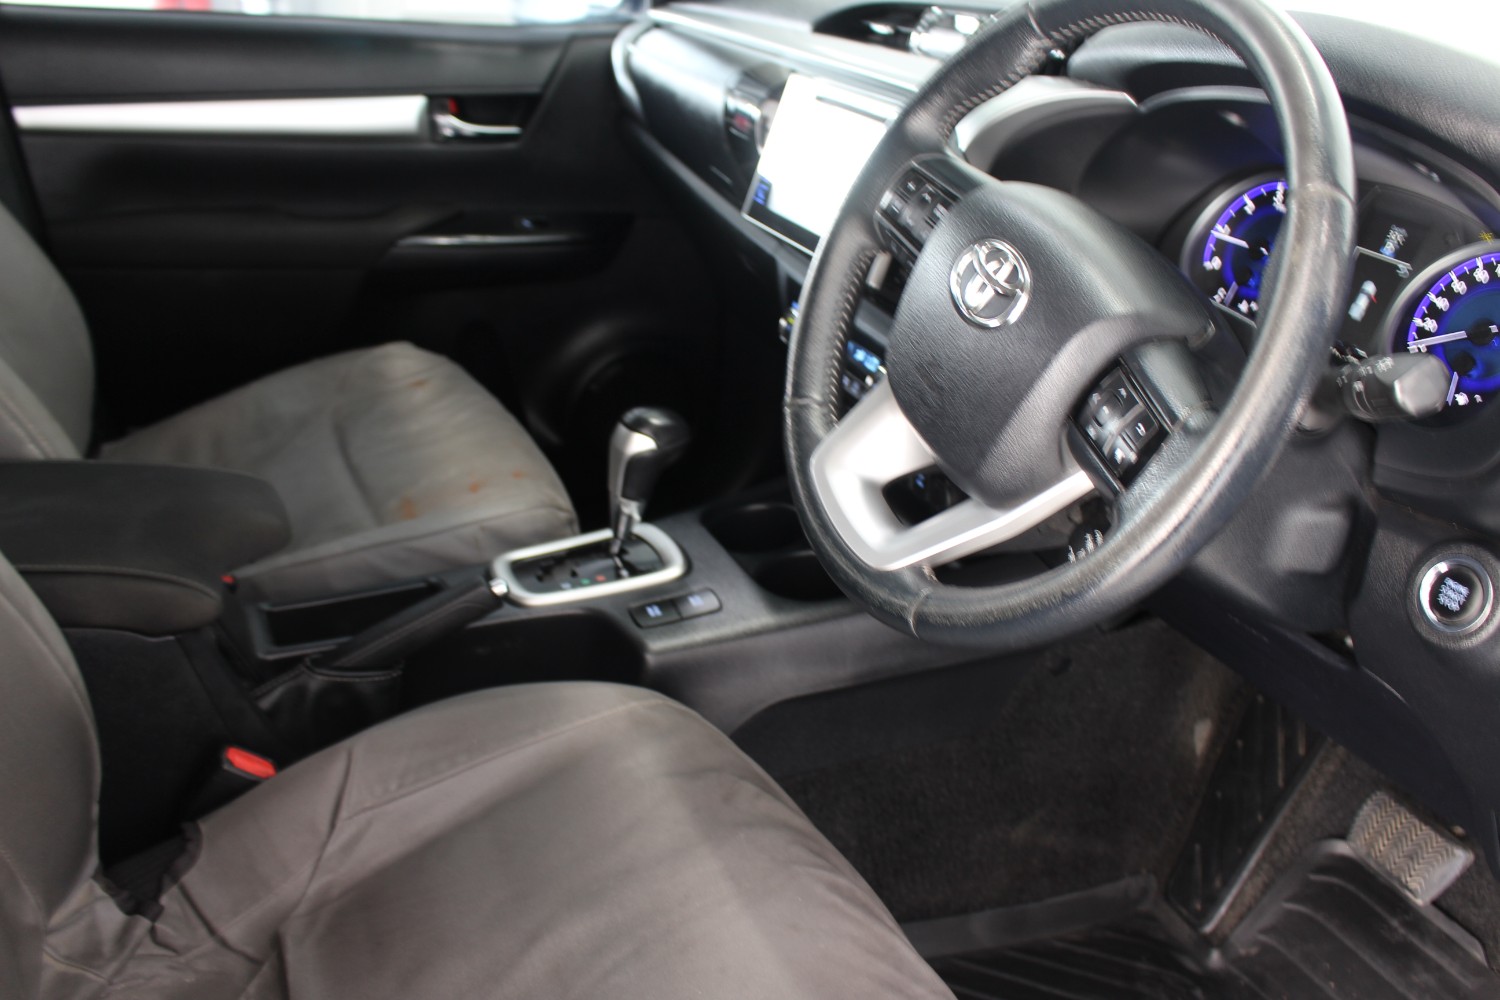 2015 MY16 Toyota HiLux SR5 4x4 Double-Cab Pick-Up Dual Cab Image 8